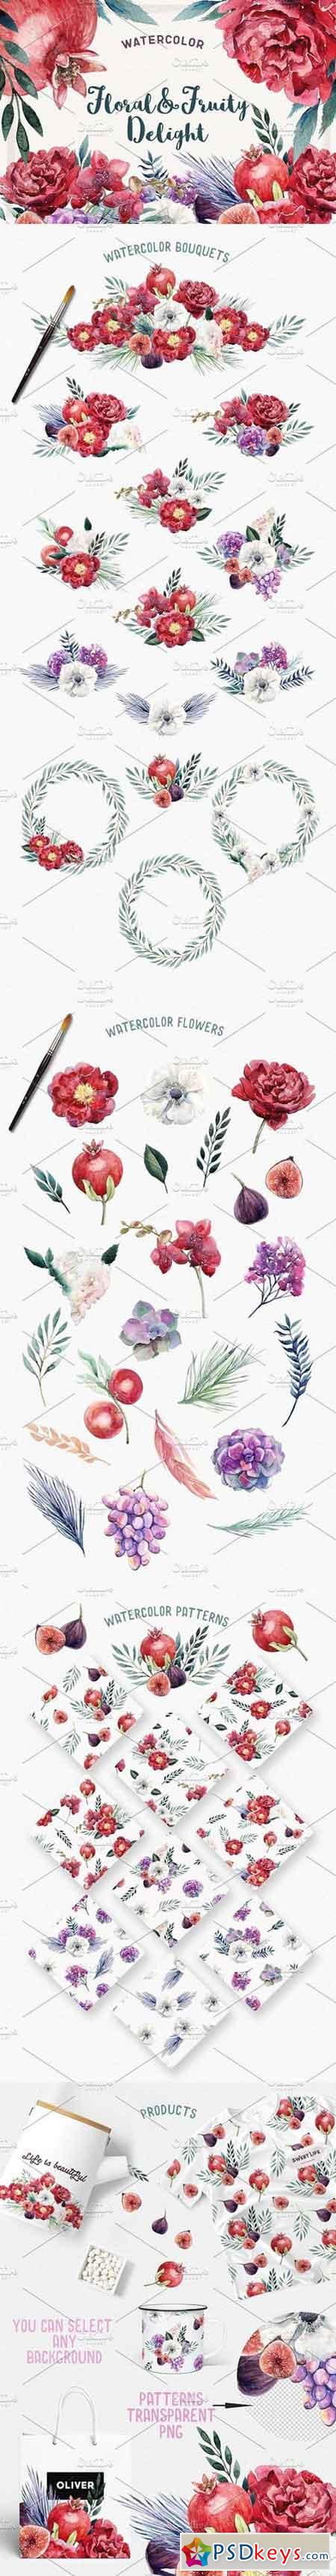 Watercolor Floral & Fruity Delight 949088